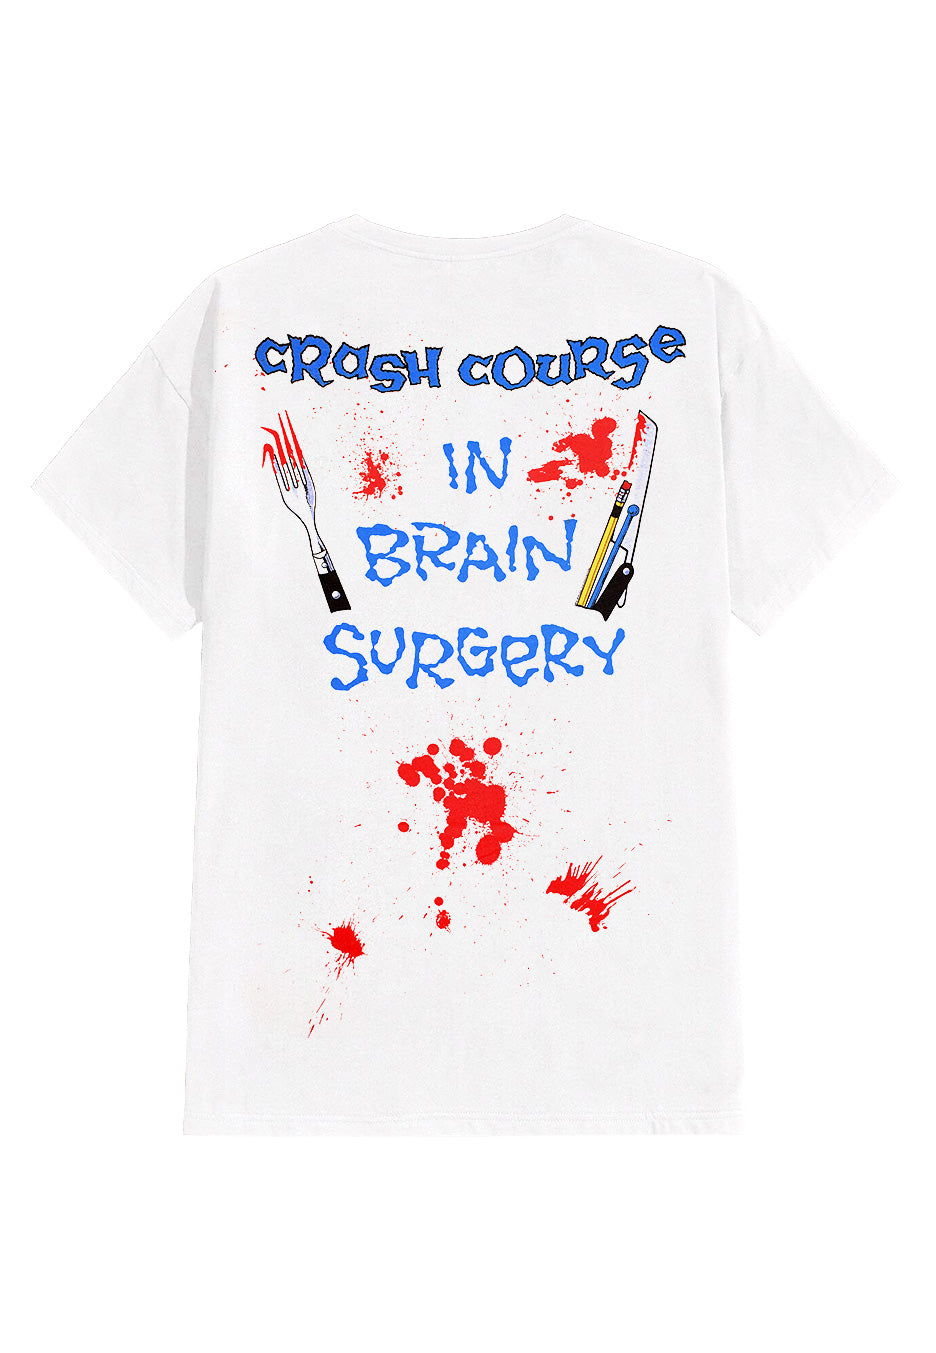 Metallica - Crash Course In Brain Surgery (All Over) - T-Shirt